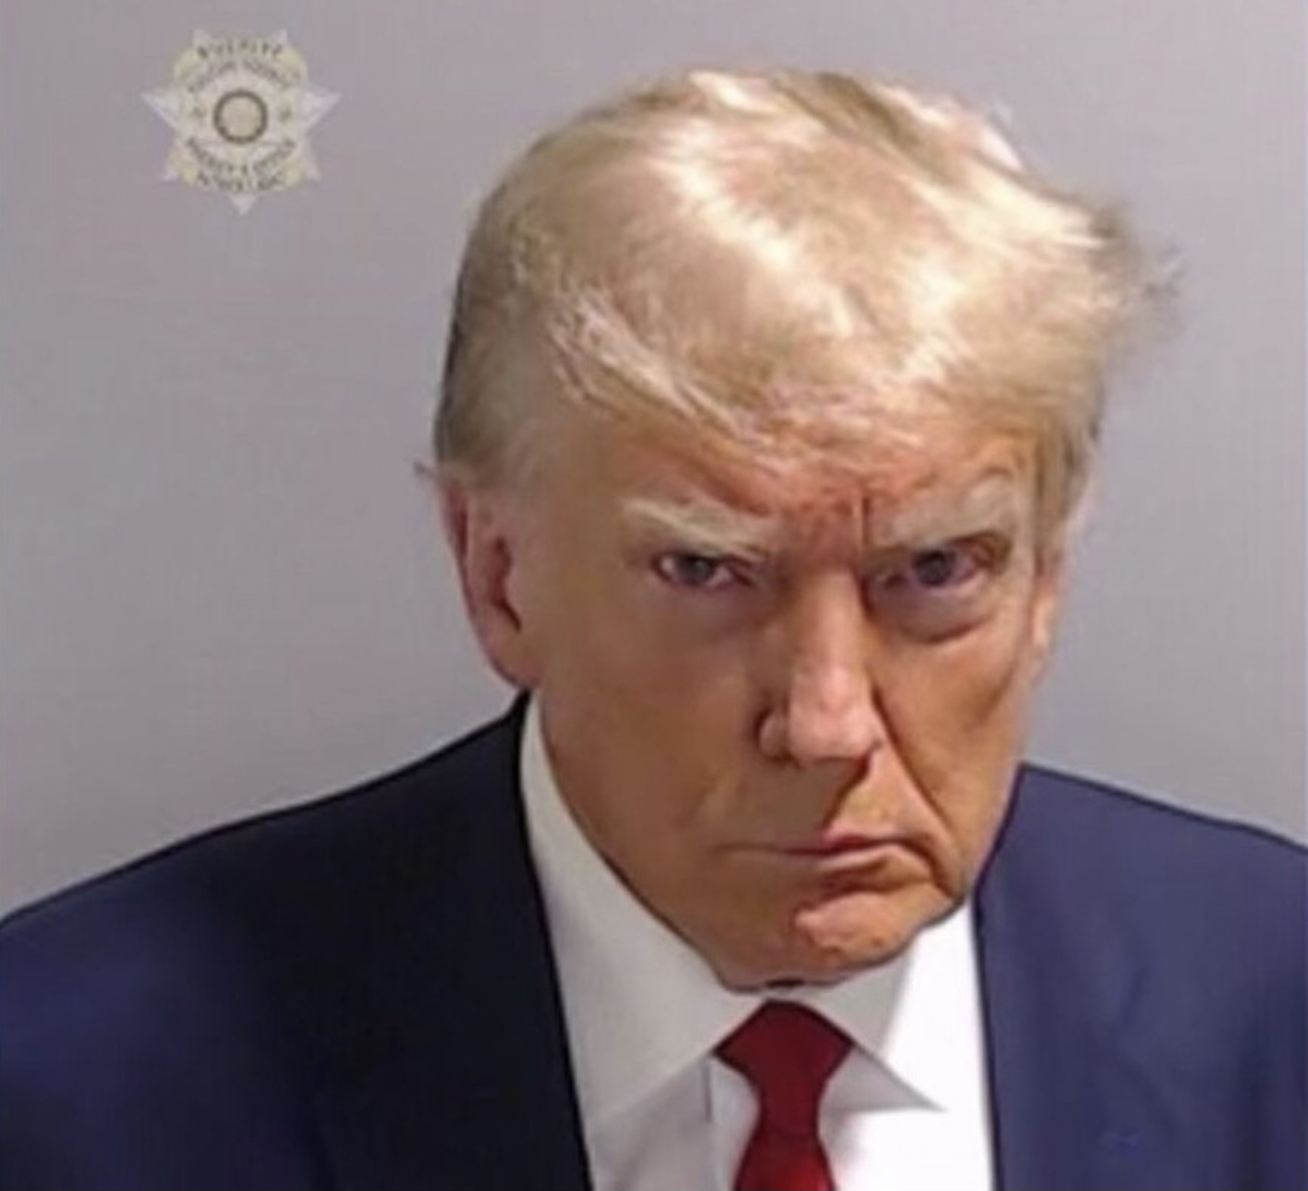 Donald Trump case mugshot